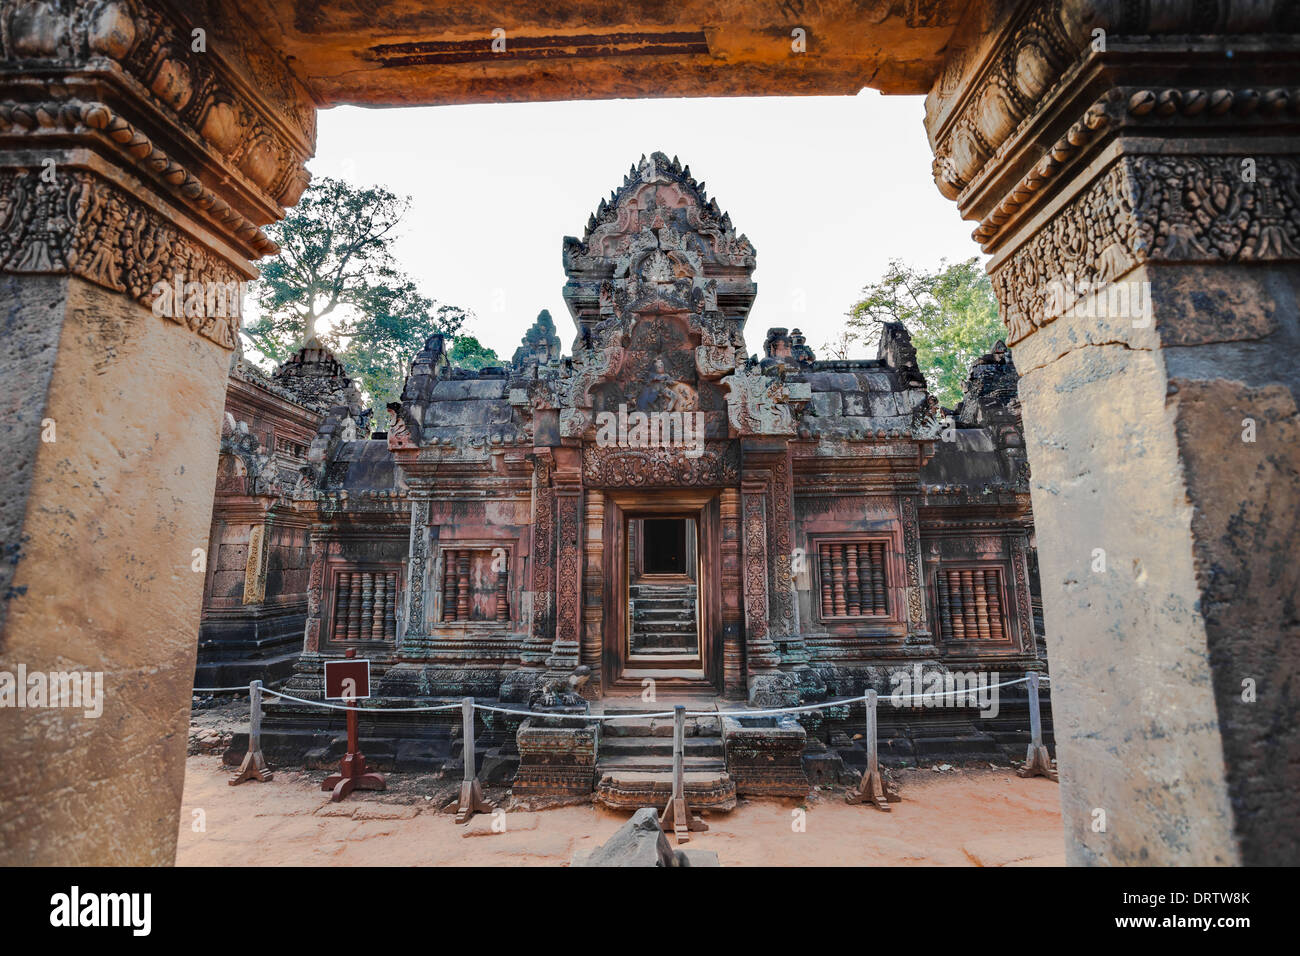 Banteay srey temple, siem reap, cambodia Stock Photo